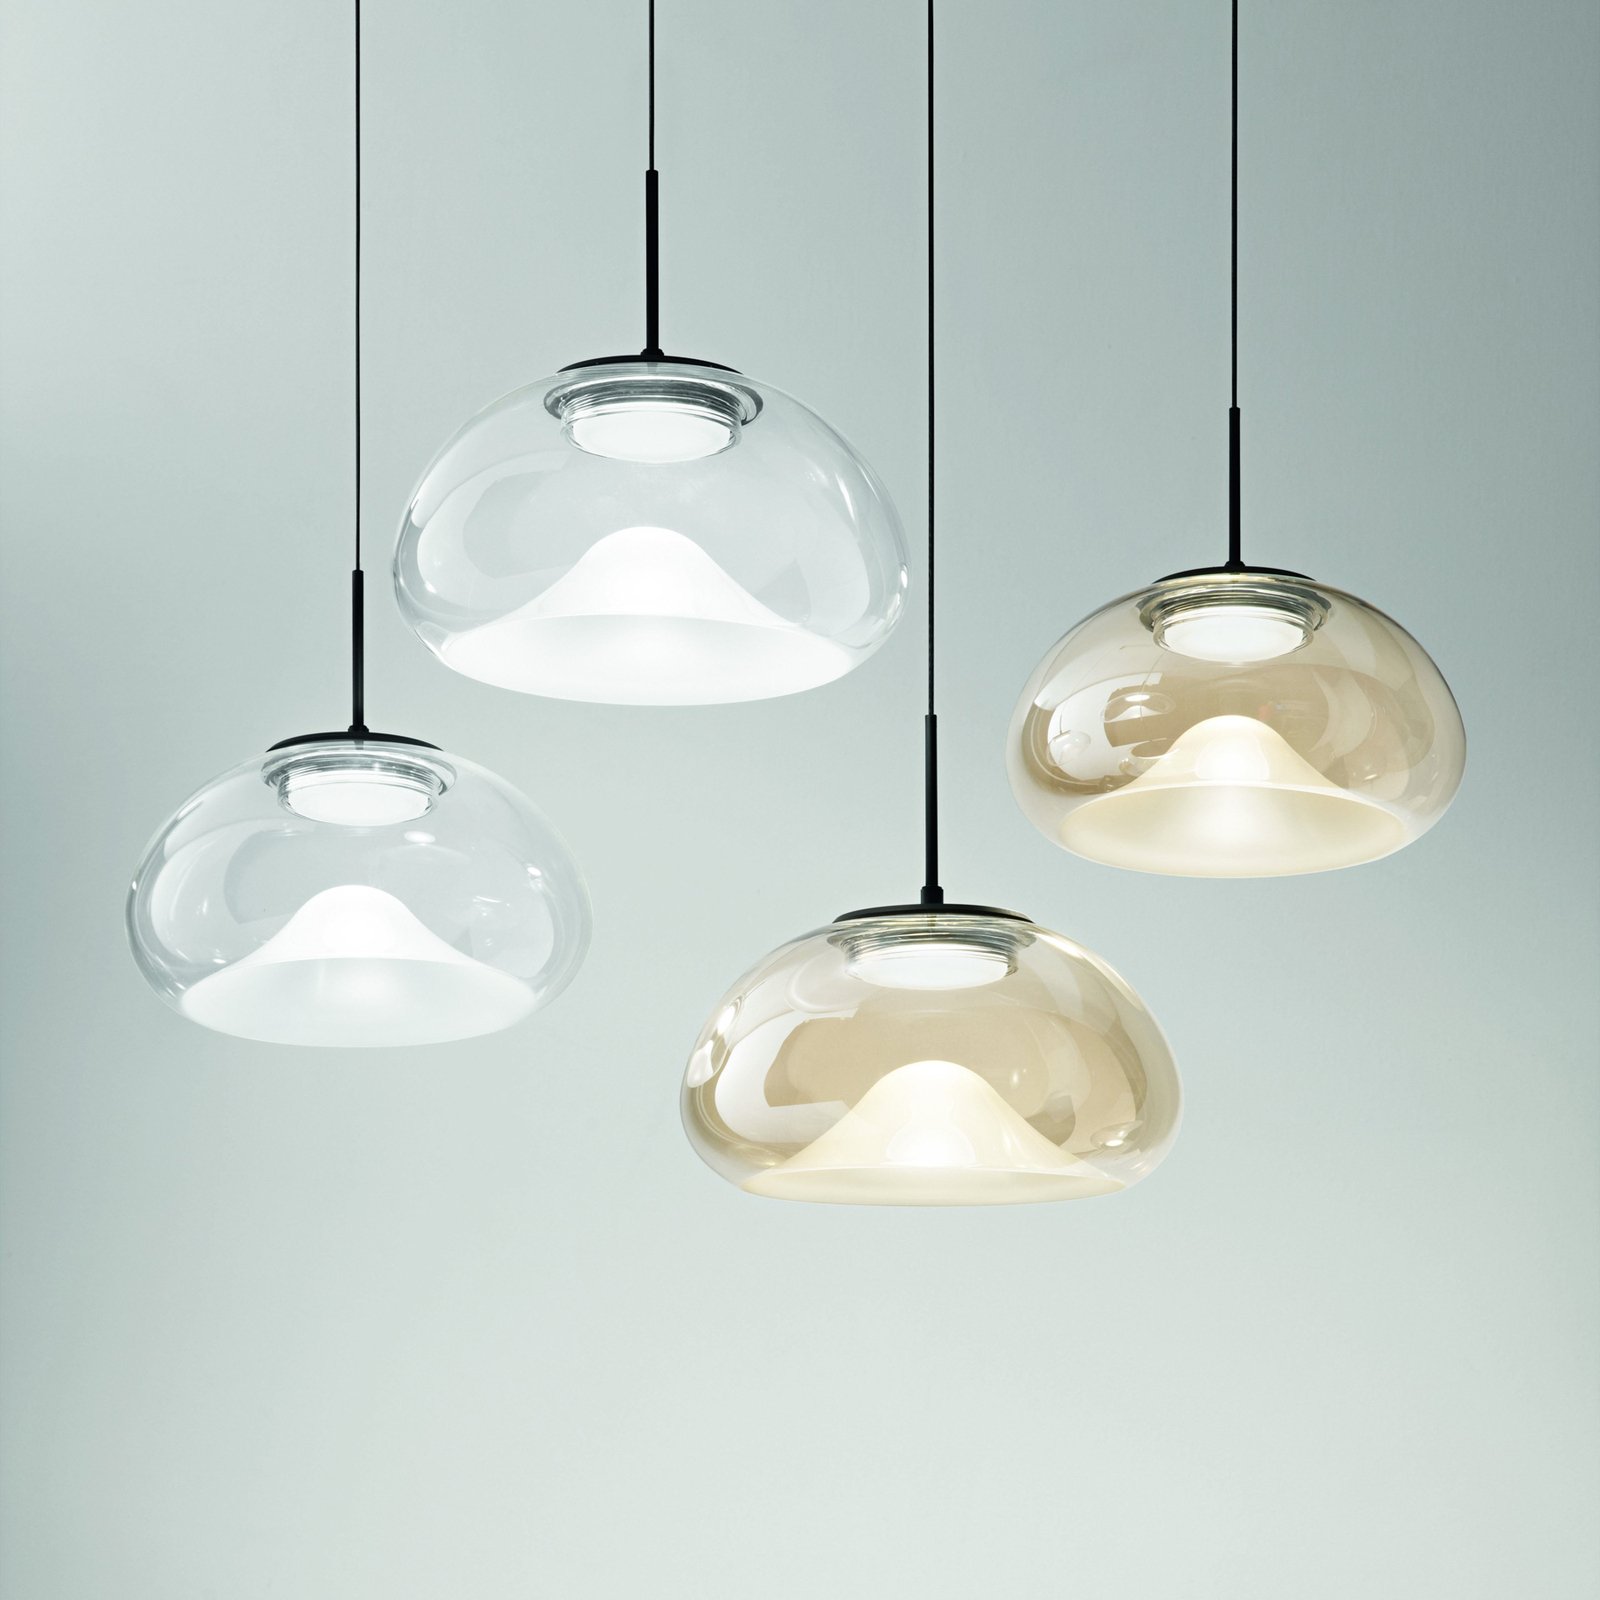 LED pendant light Brena, transparent, 1-bulb, dimmable, CCT